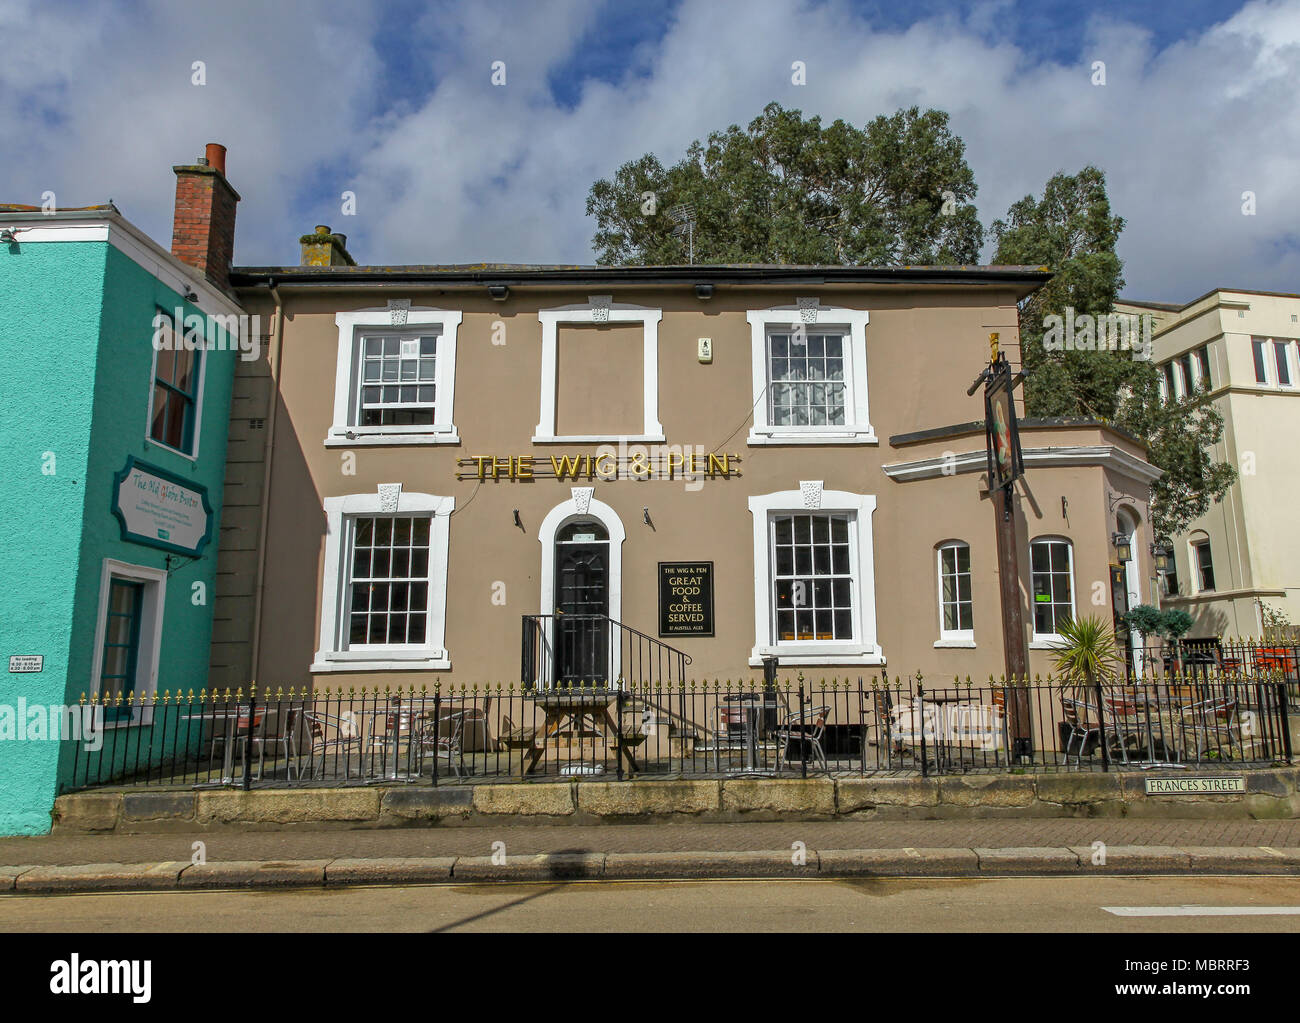 La parrucca e penna inn pub o public house, Frances Street, Truro, Cornwall, South West England, Regno Unito Foto Stock